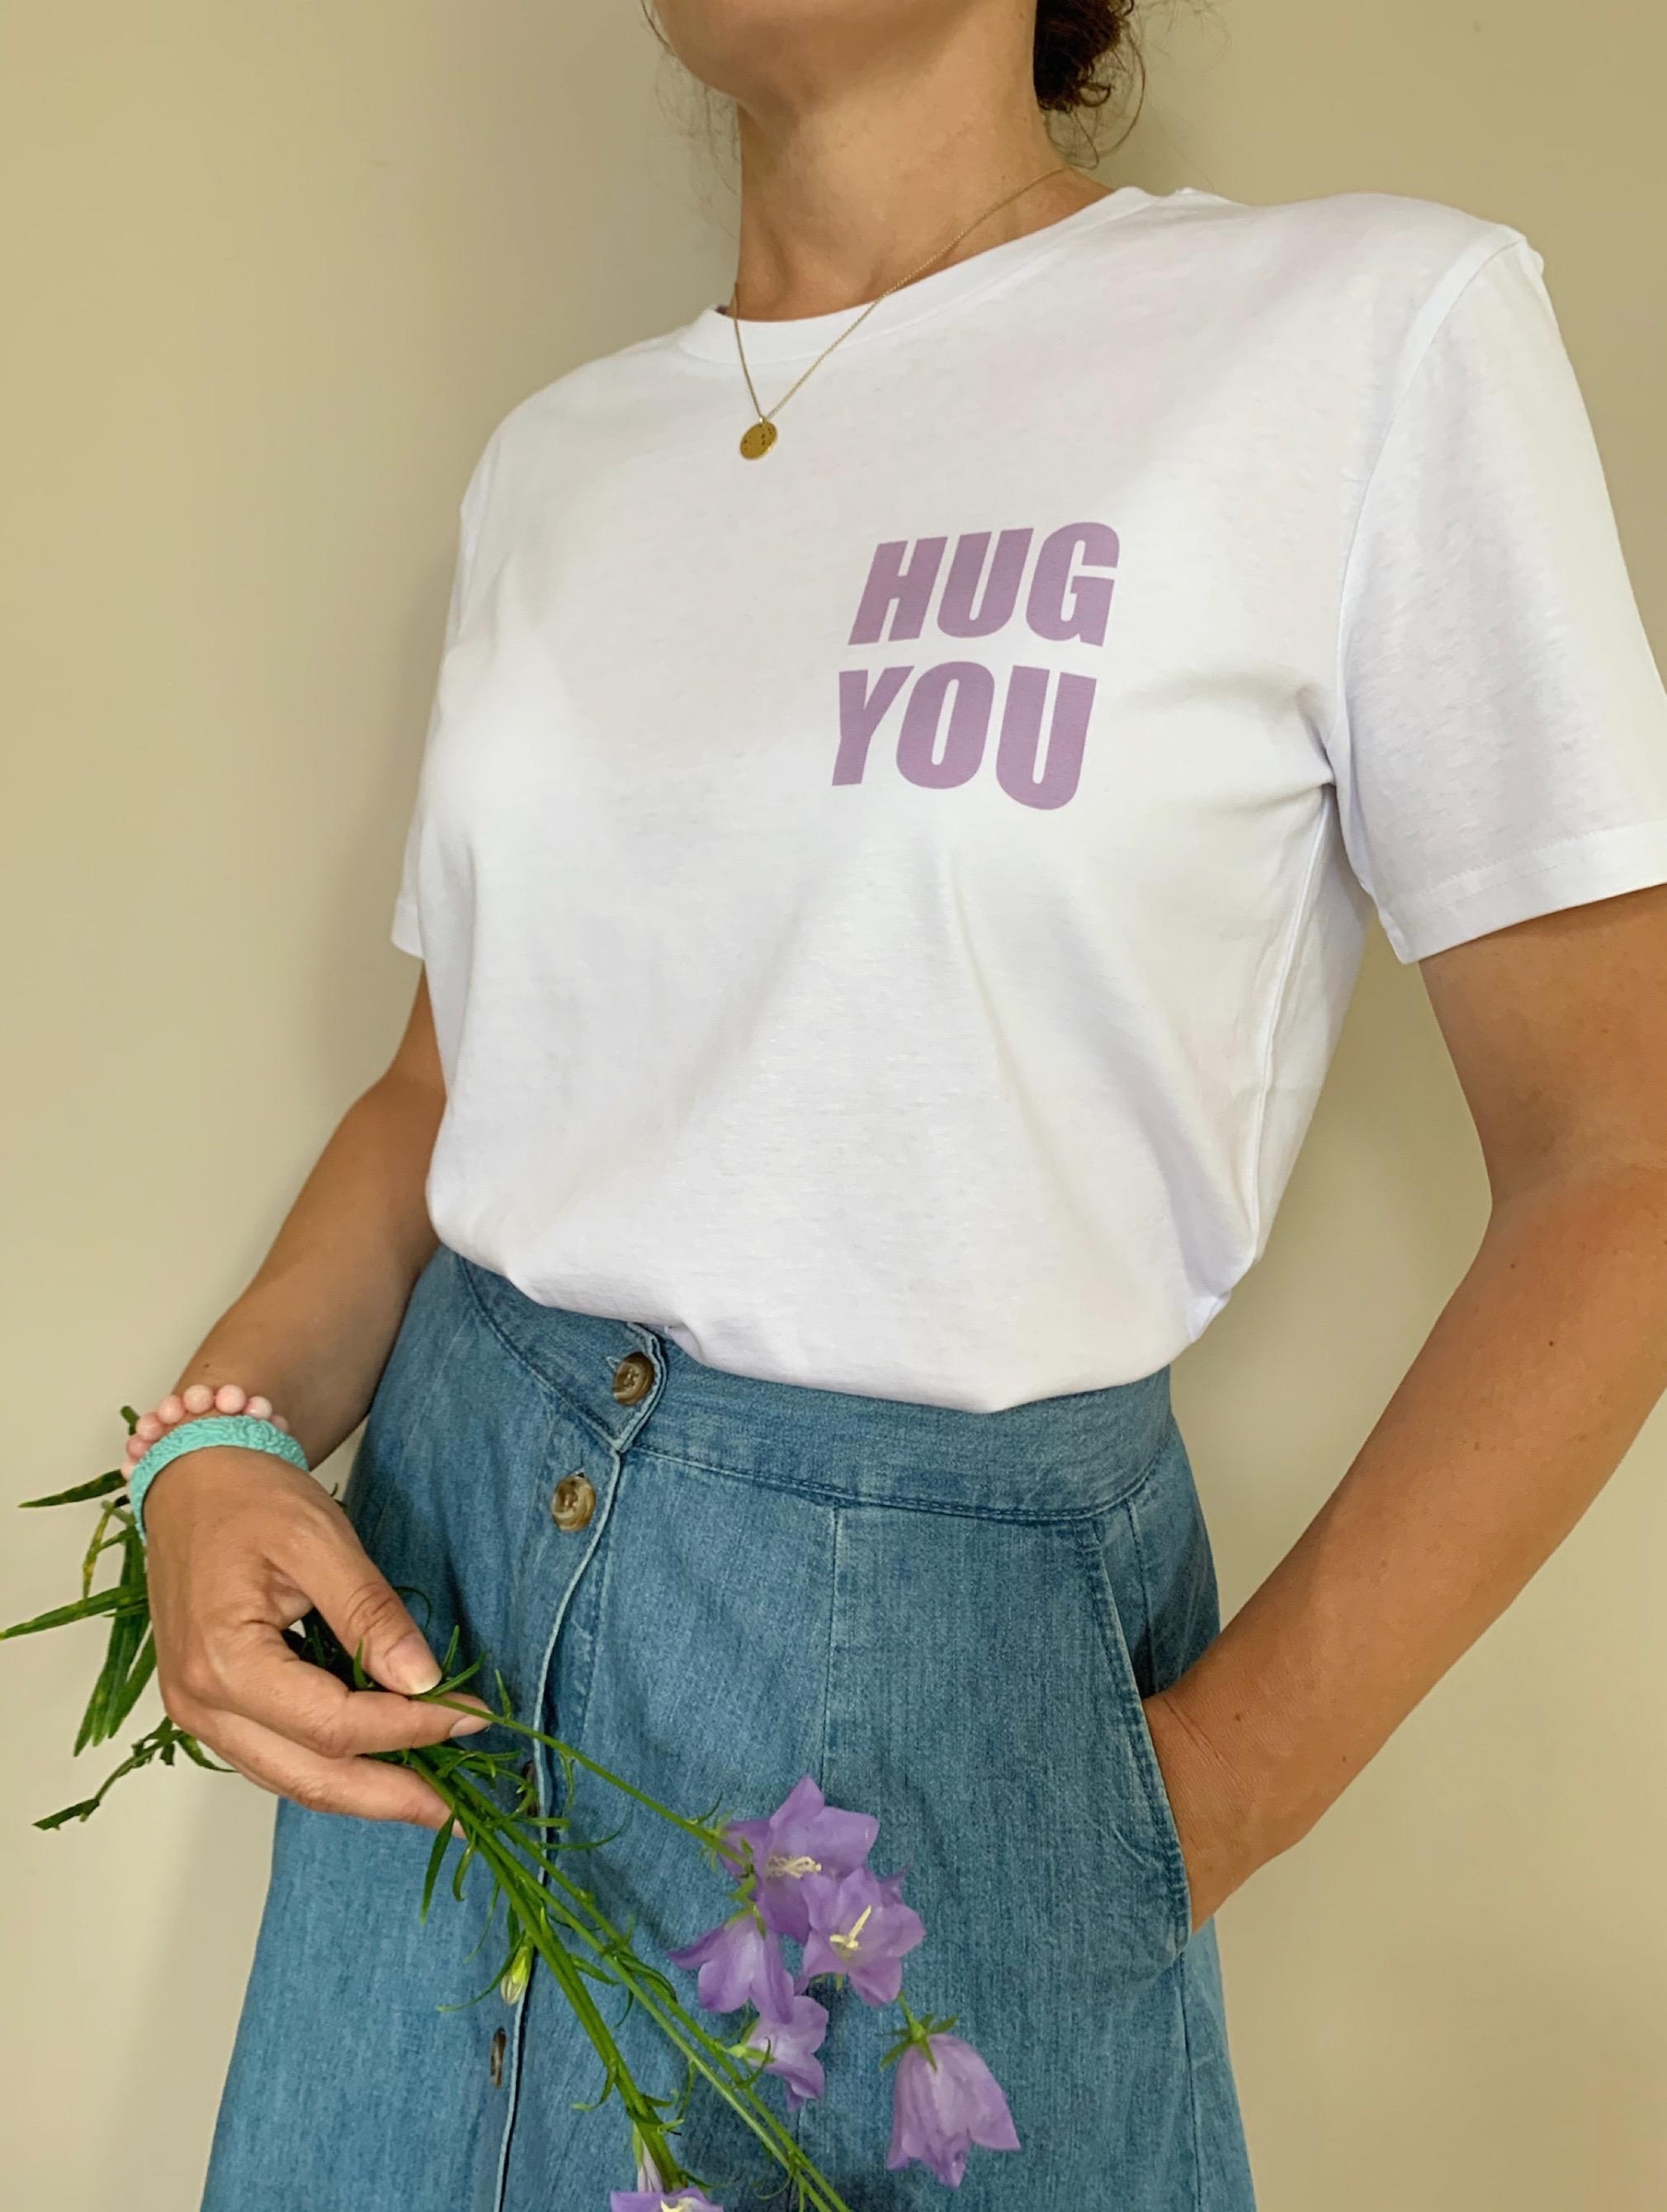 HUG YOU
#kleidung #tshirt #mode #fashion #flower #blumen